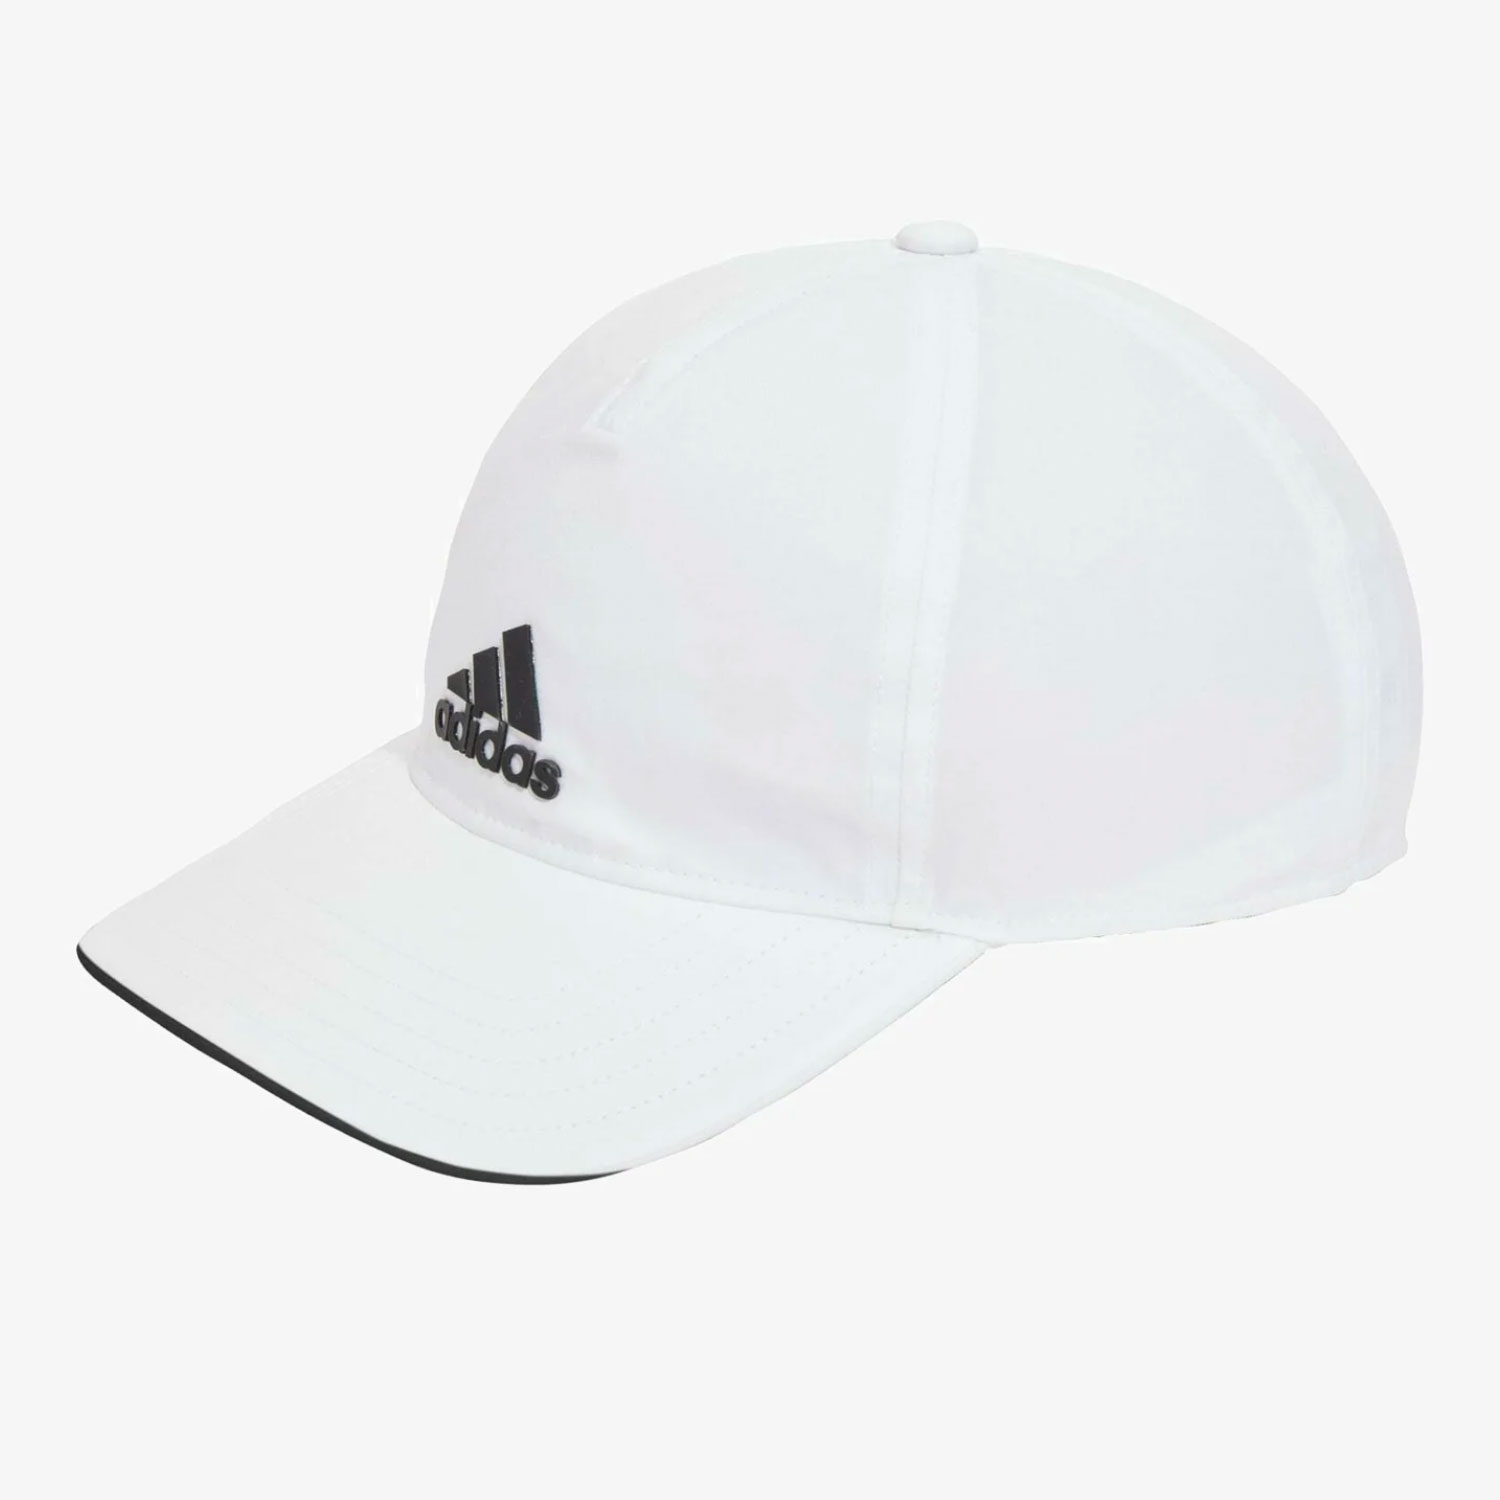 Performance cap white